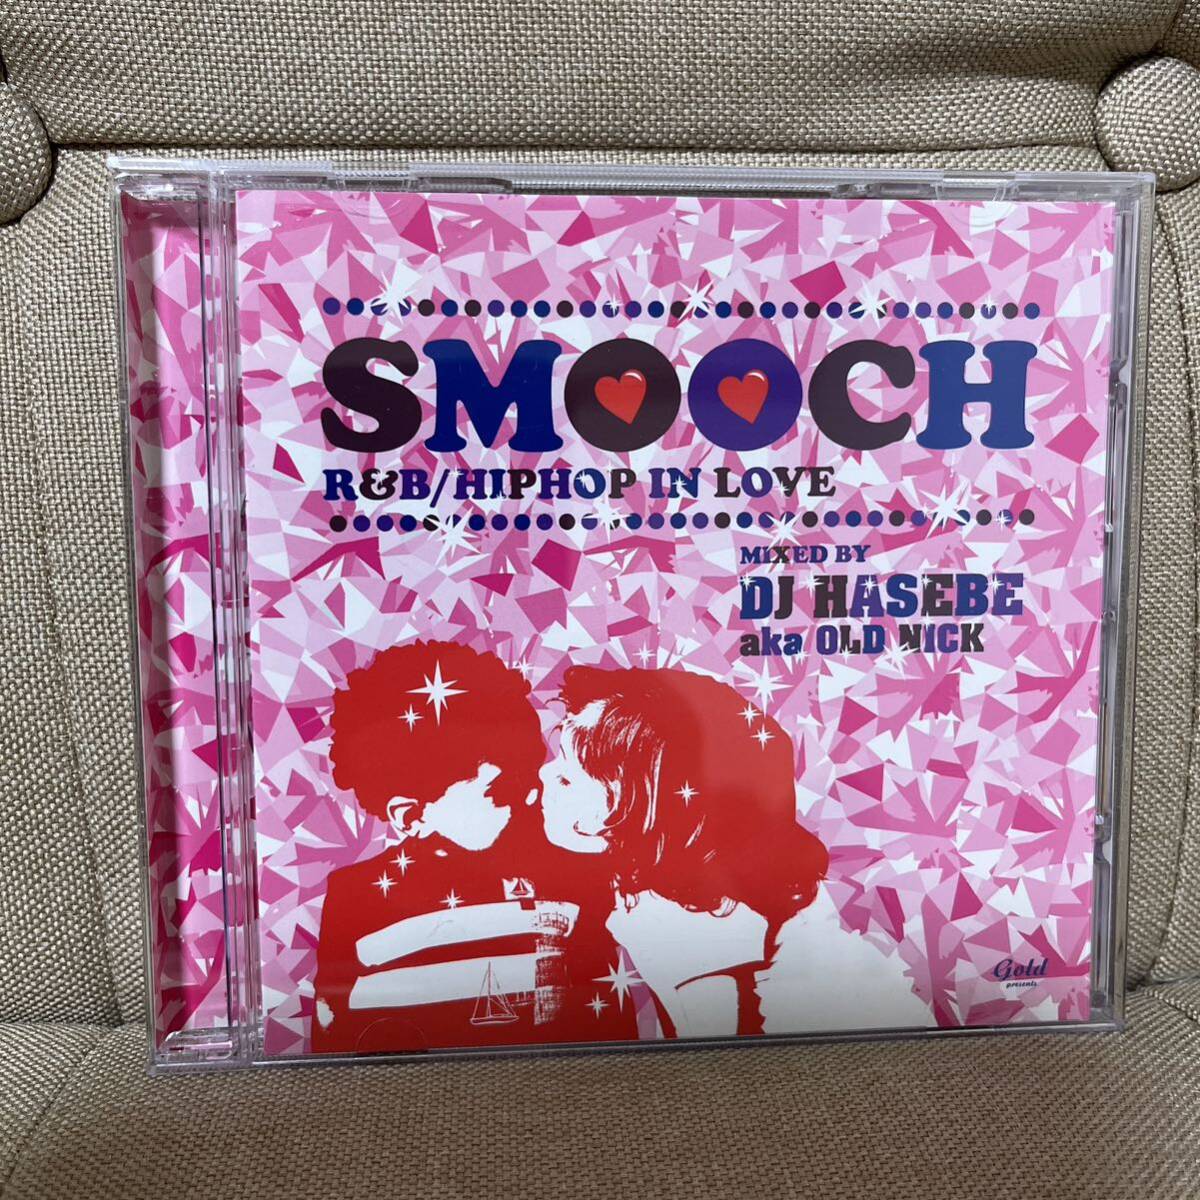 【DJ HASEBE aka OLD NICK】SMOOCH - HIPHOP / R&B IN LOVE【MIX CD】【廃盤】【送料無料】_画像1